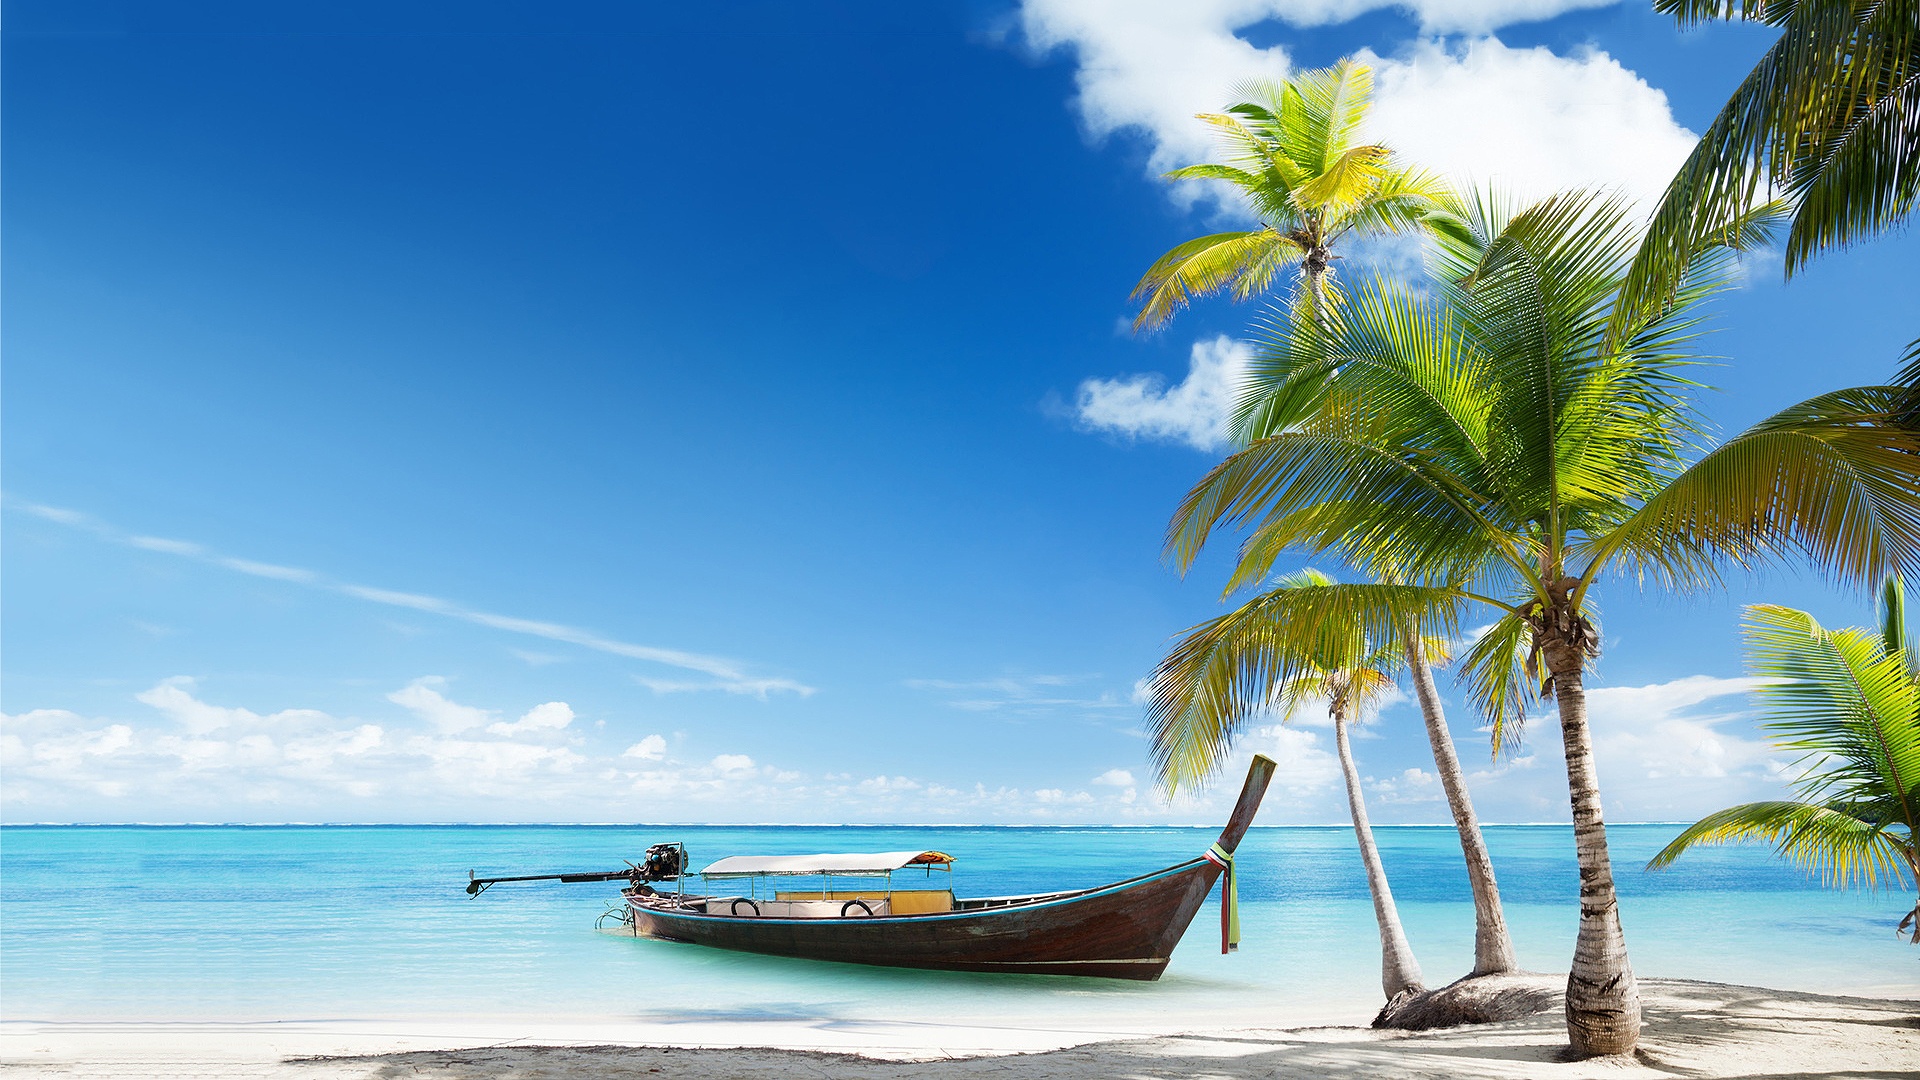 HD Tropical Beaches Island Desktop Wallpaper Full Size ...